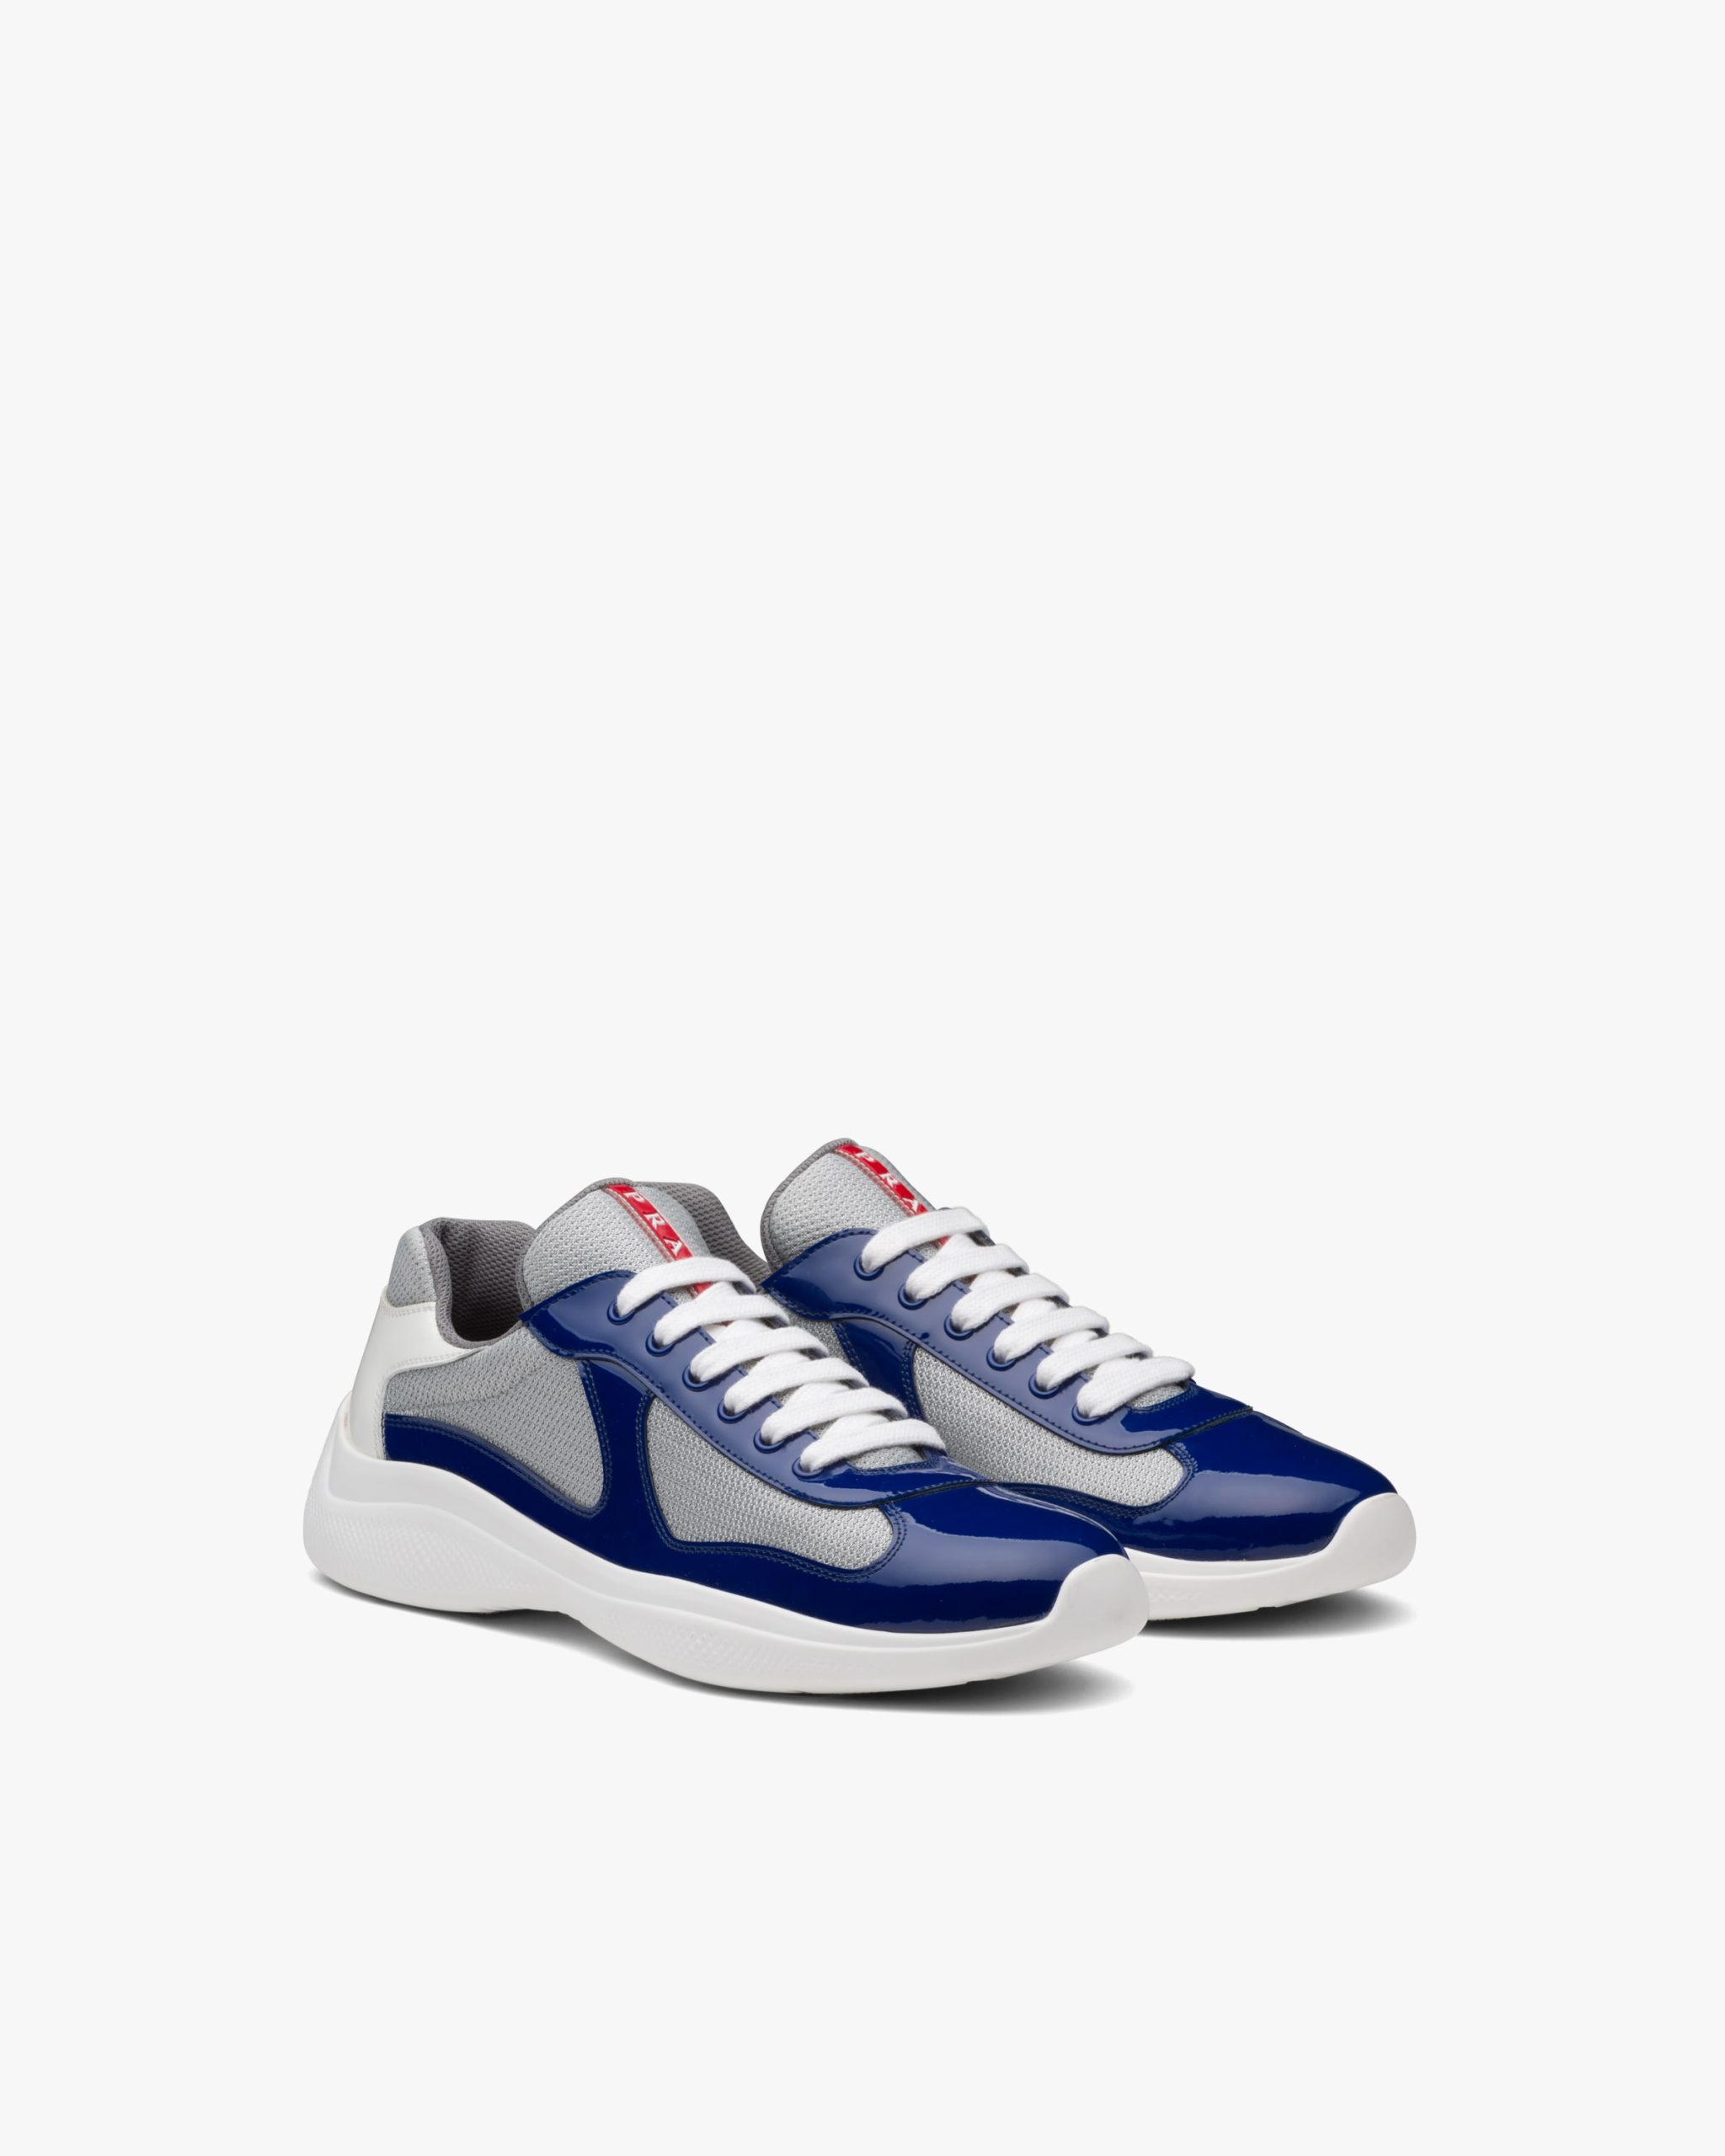 Ink Blue/white Prada Americas Cup sneakers - Fake Prada Store